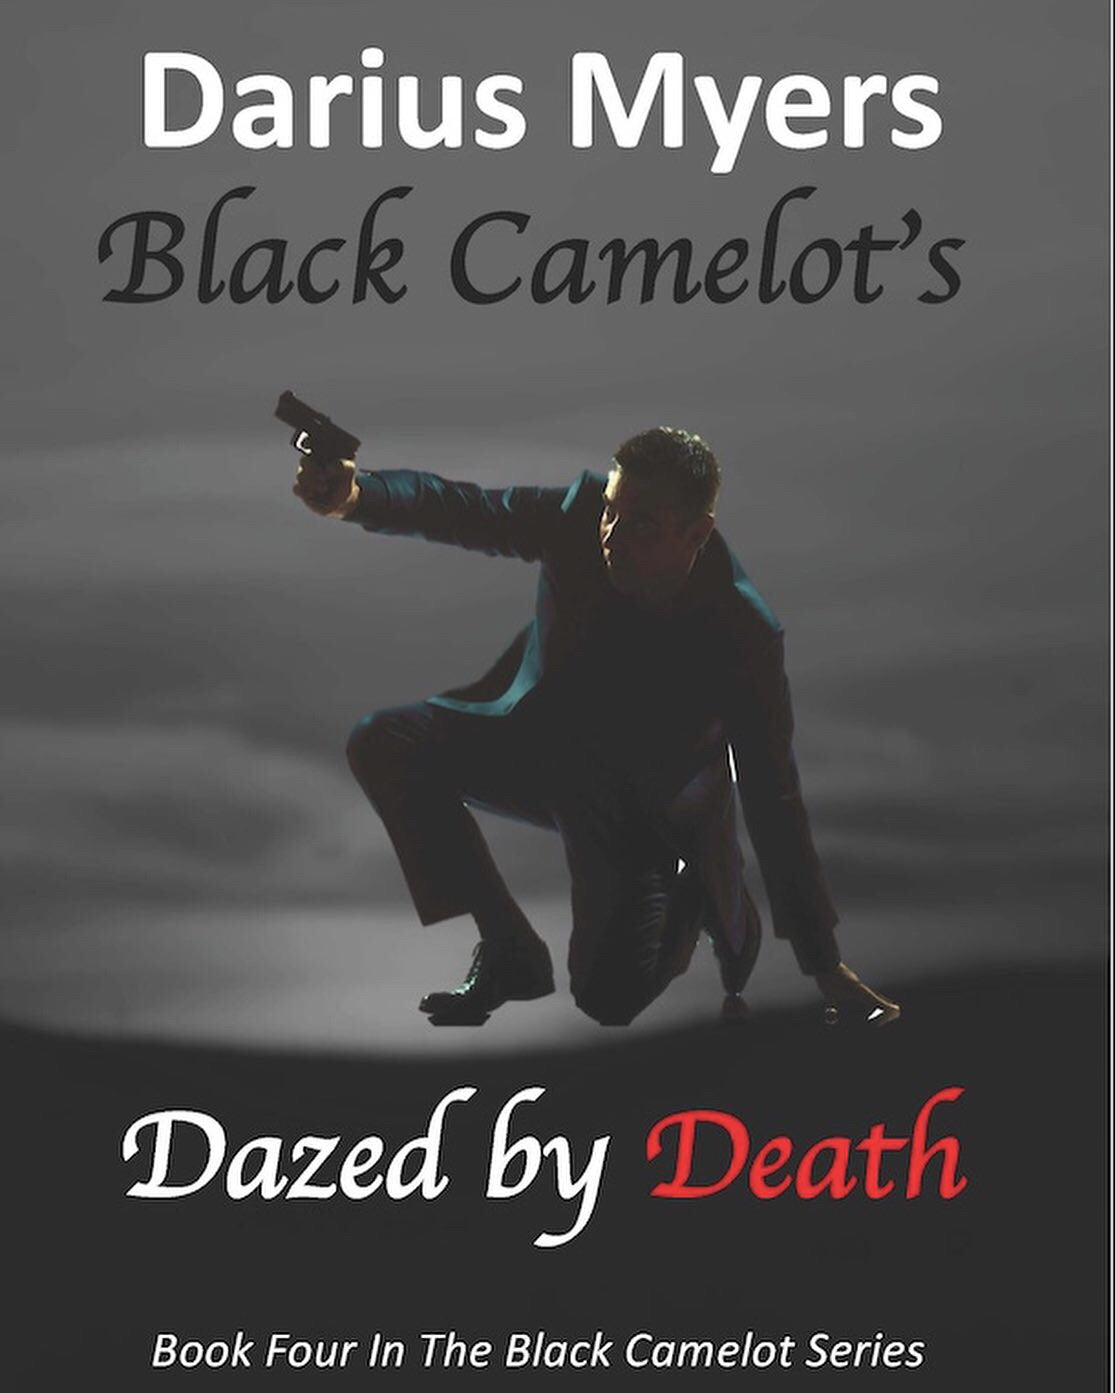 Black Camelot's Dazed By Death-Ebook